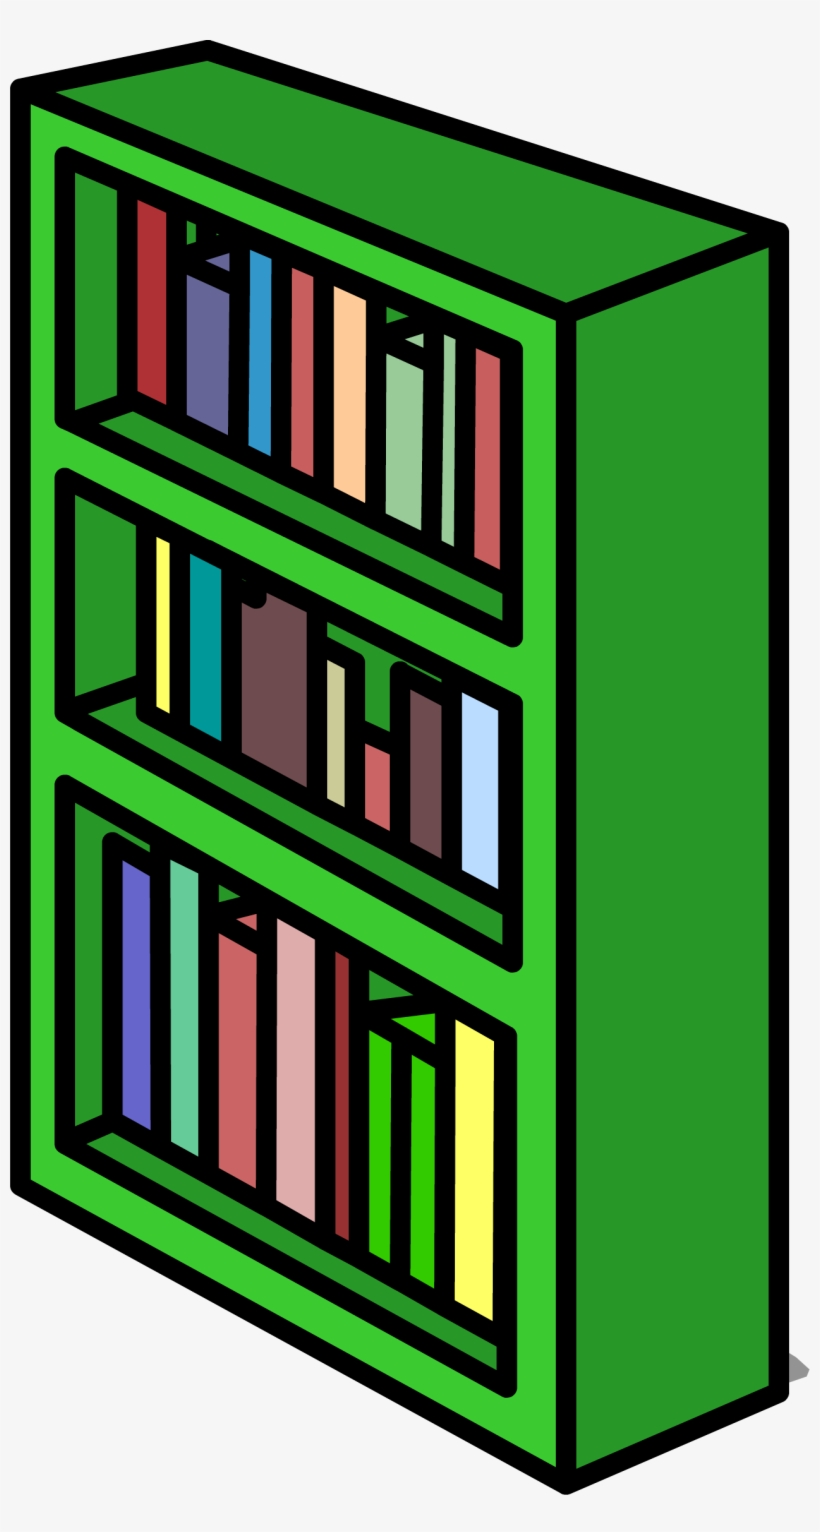 Green Bookcase Sprite 007 - Bookshelf Sprite Png, transparent png #2726505